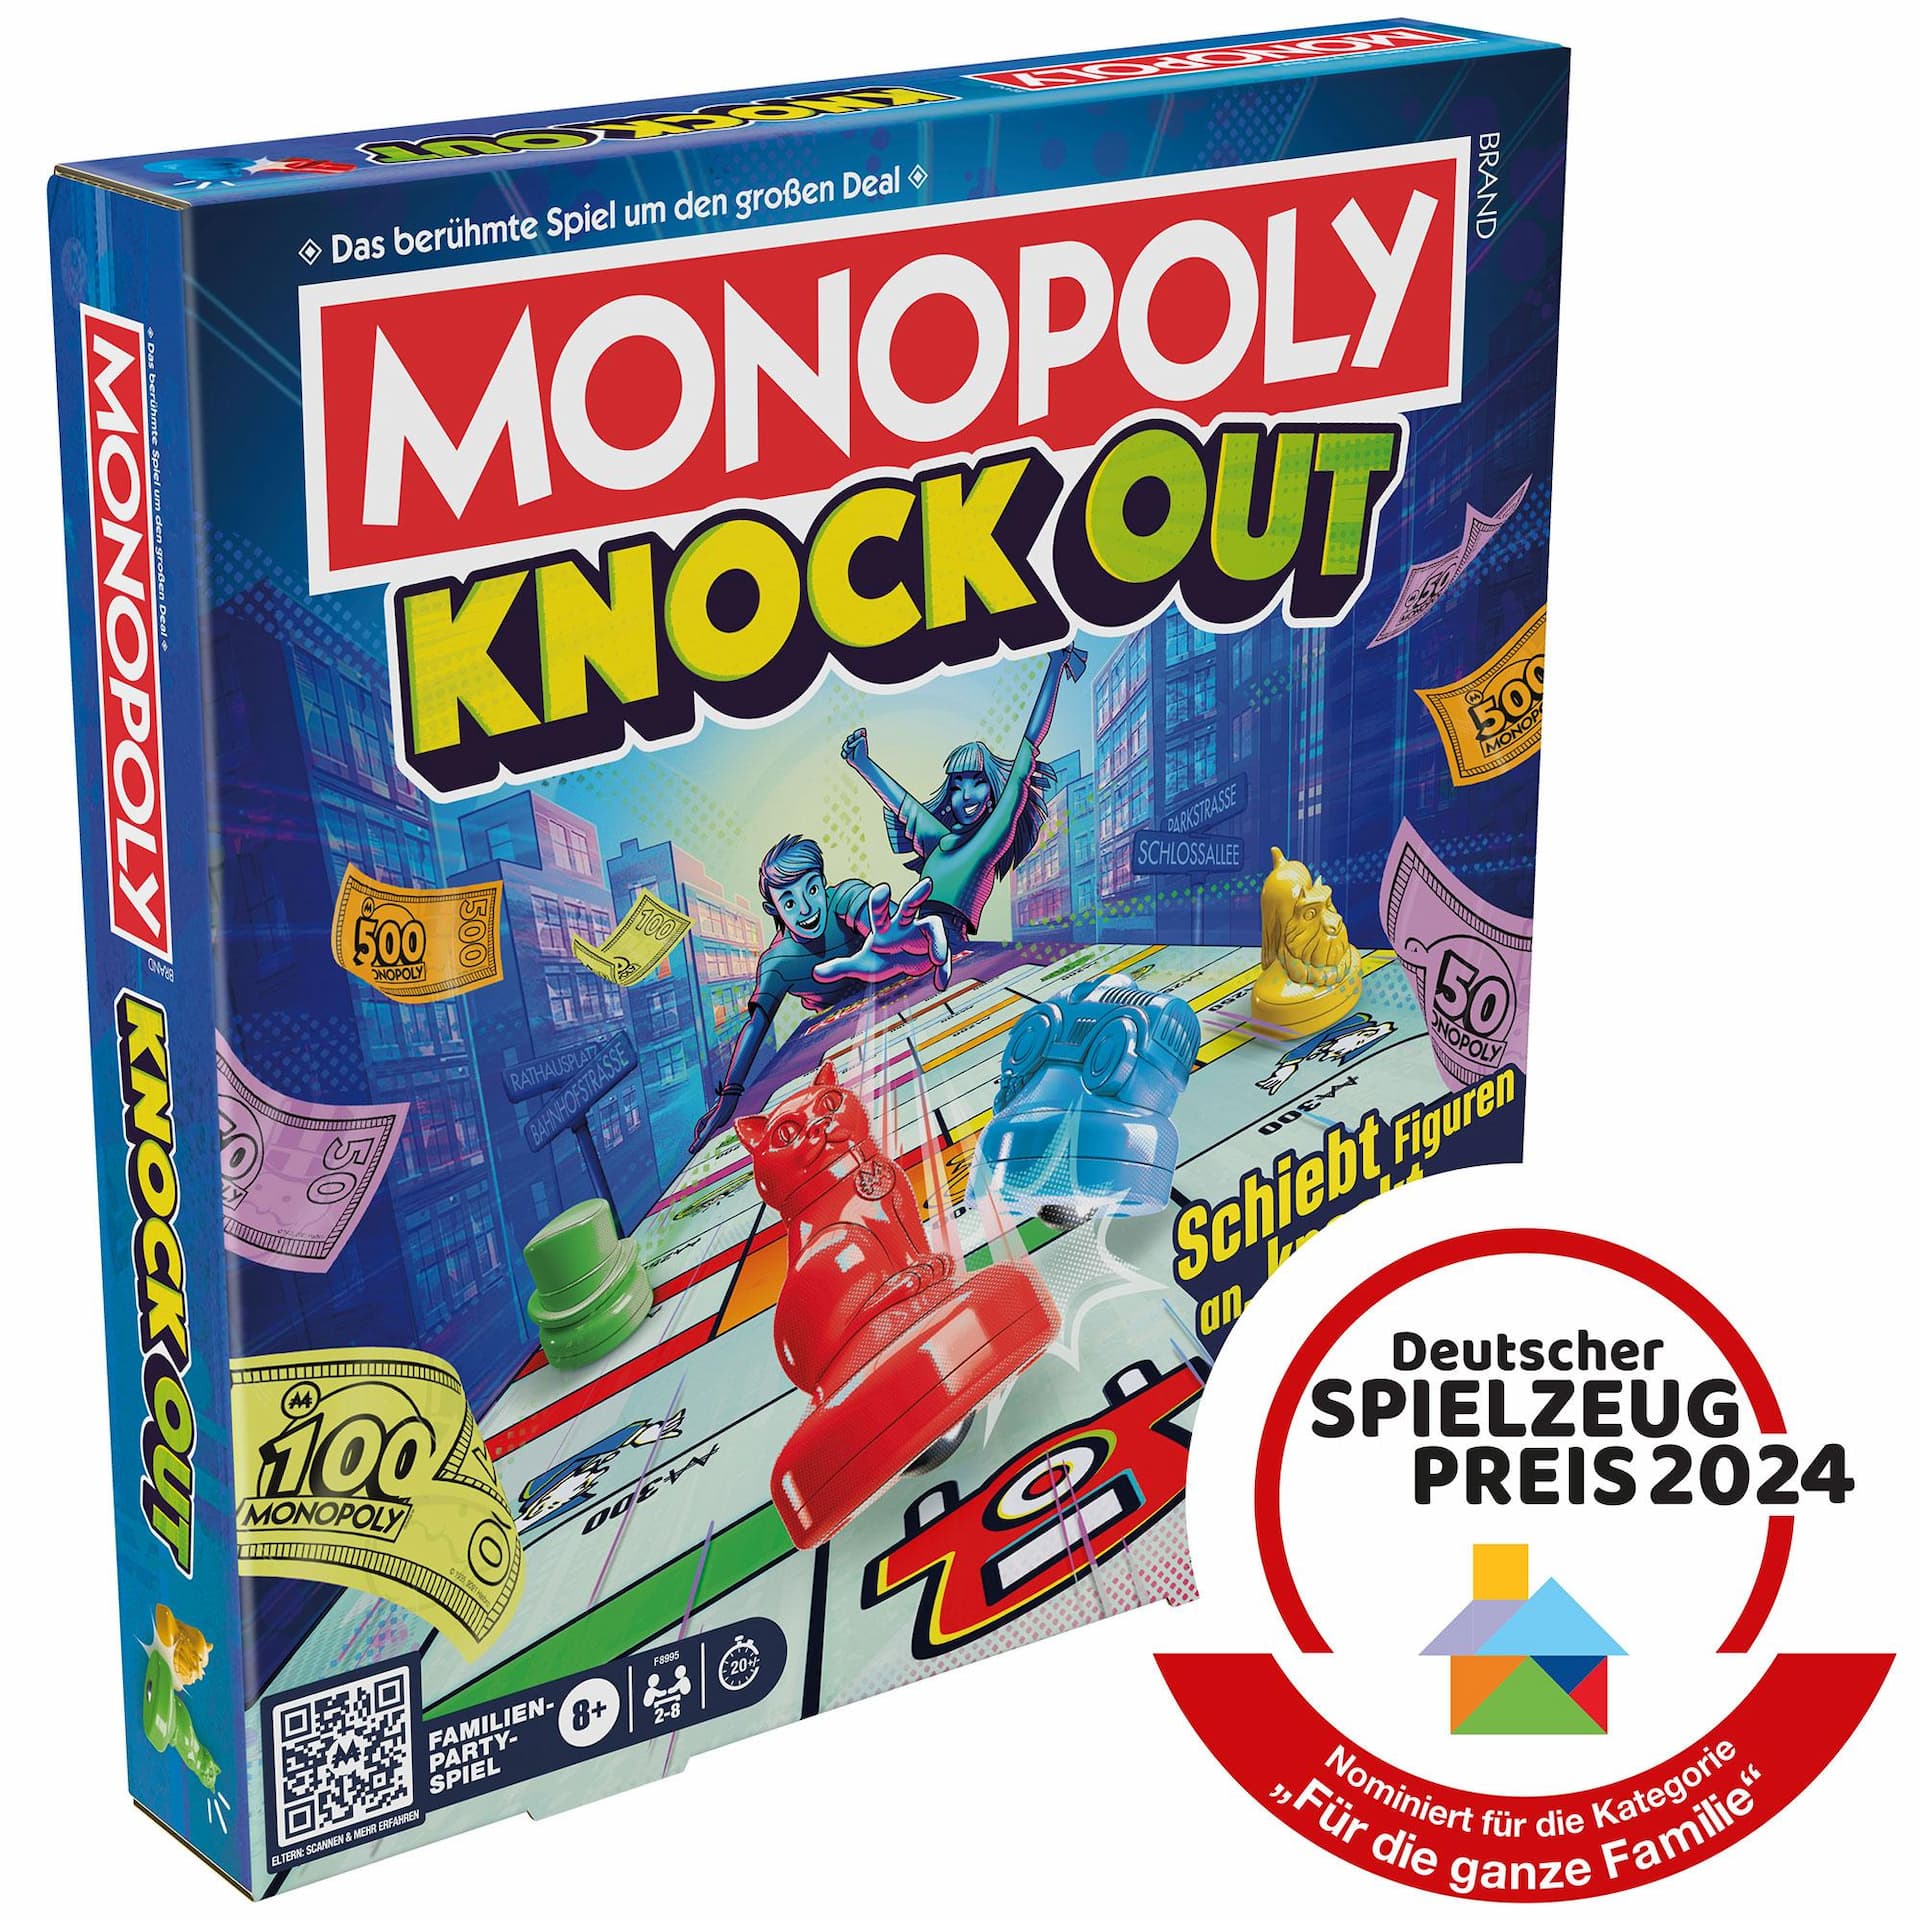 Monopoly Knockout